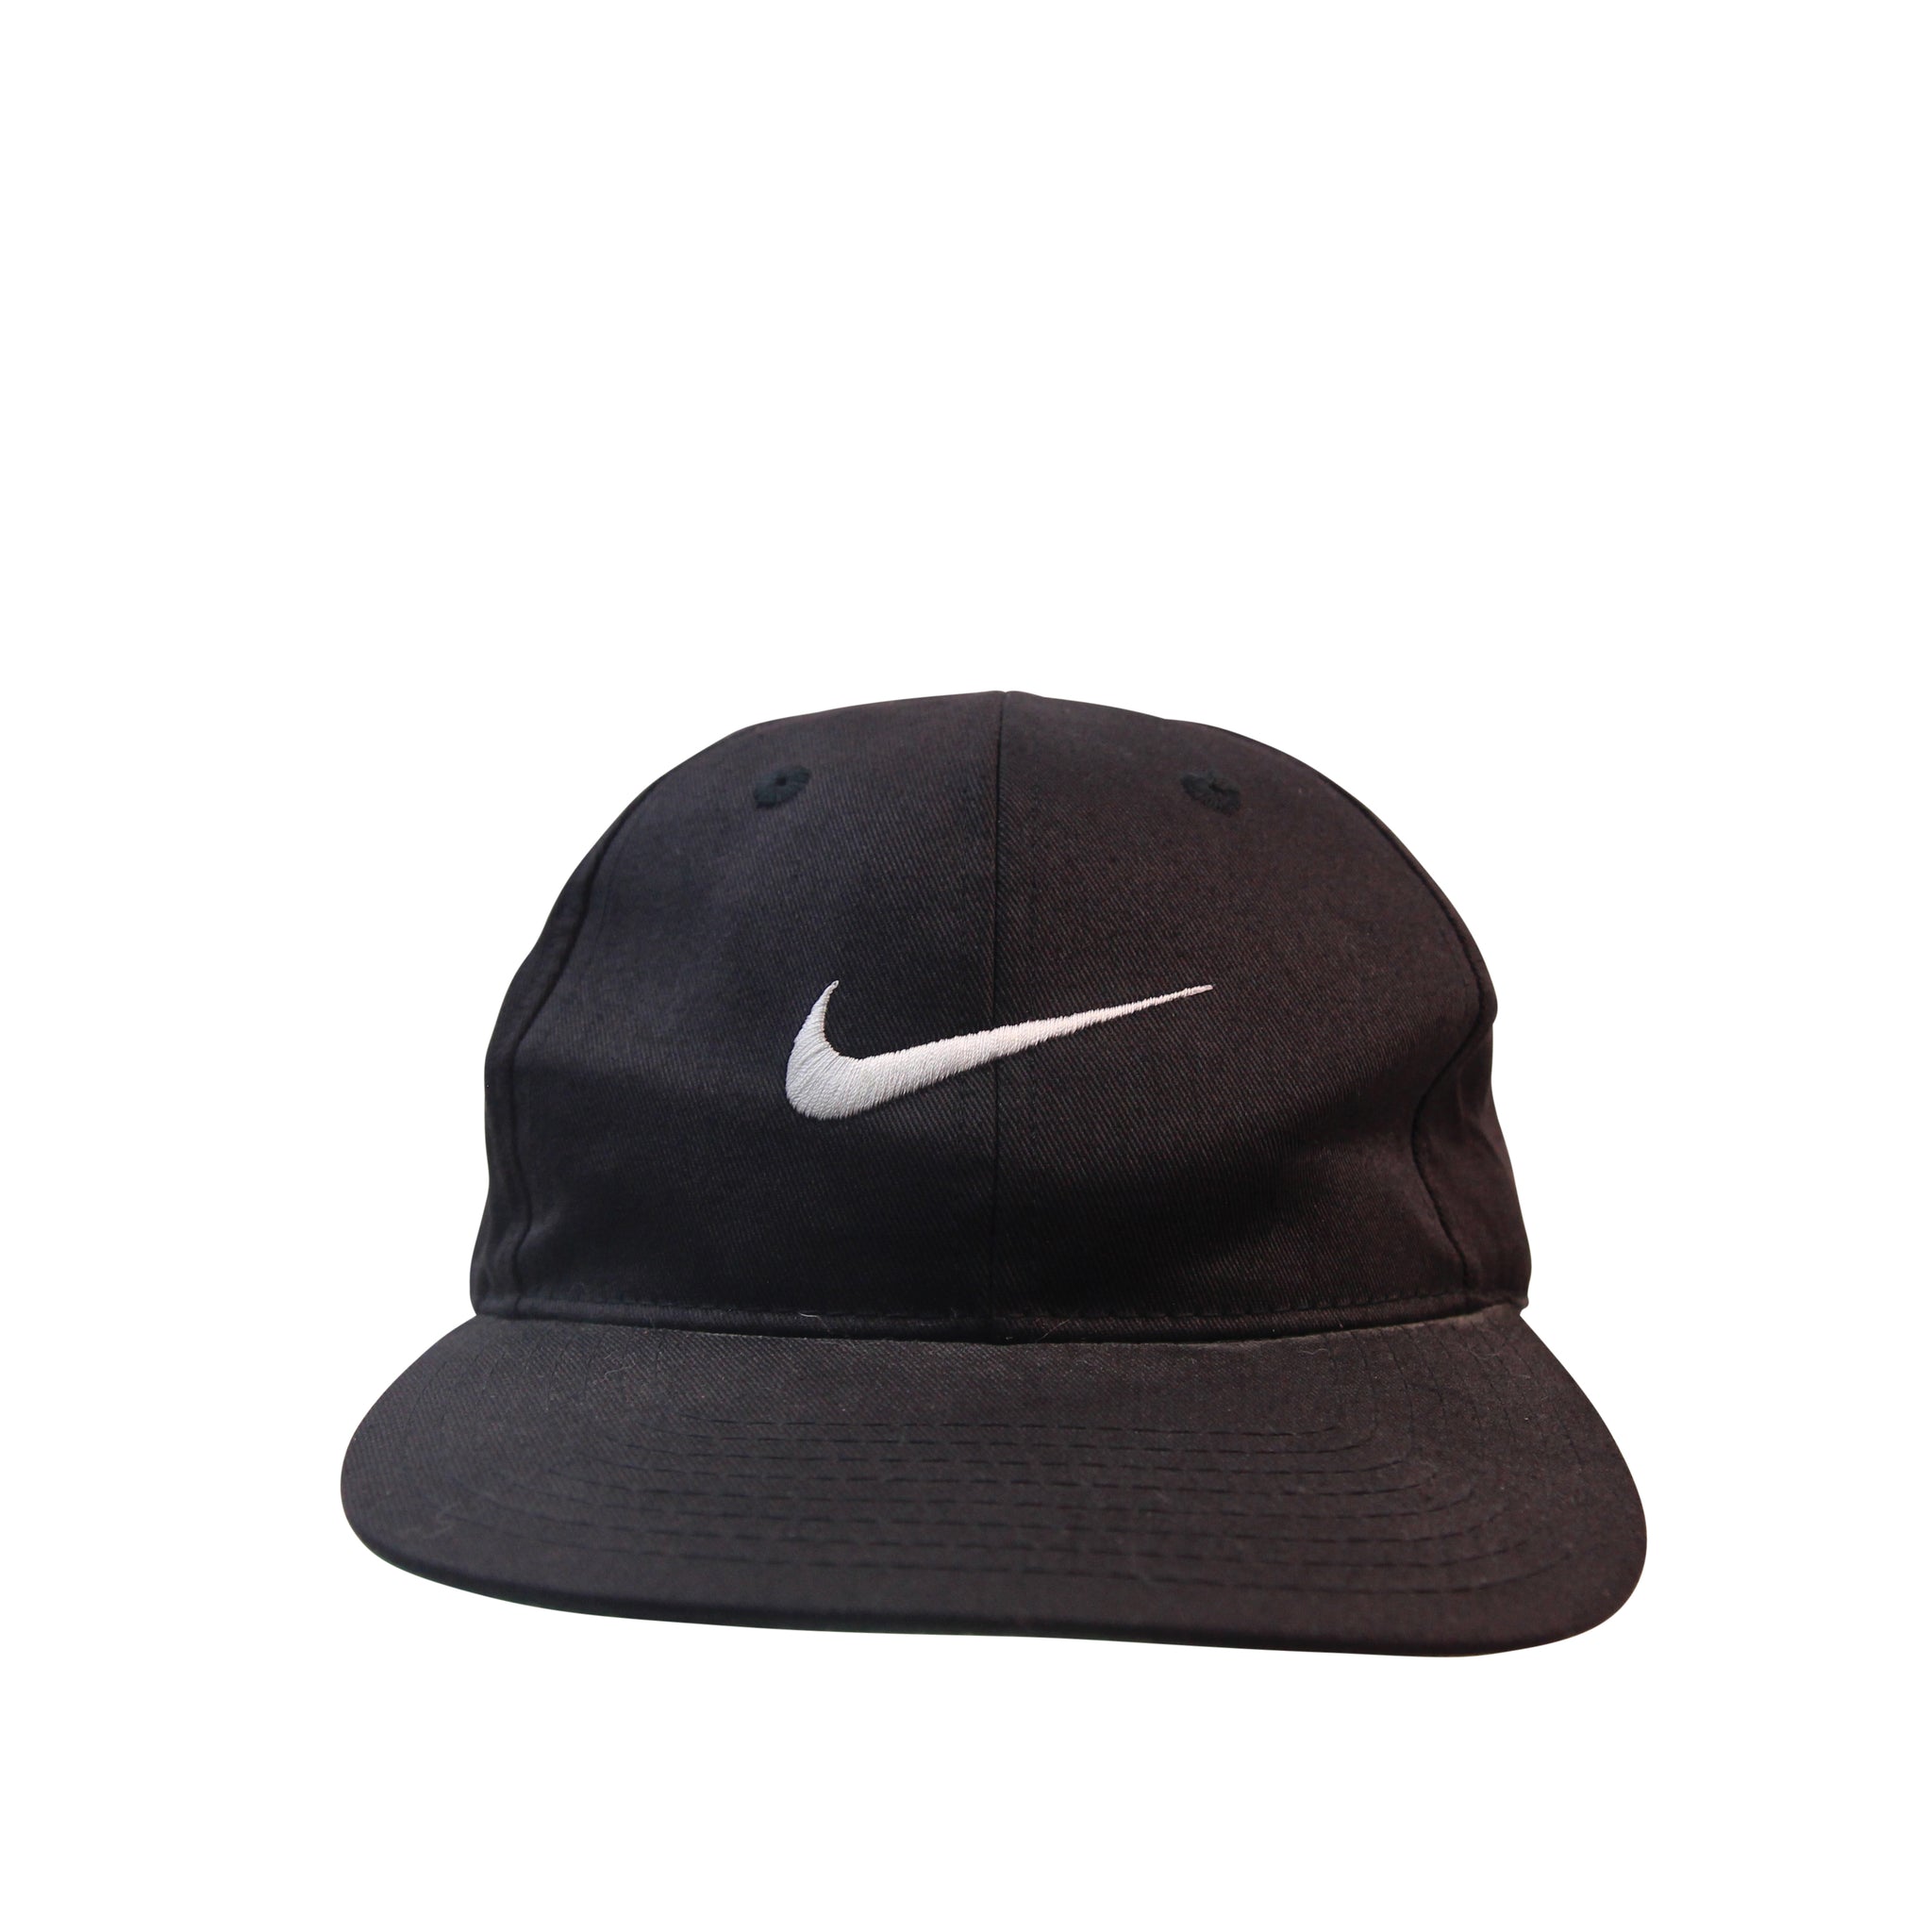 Vtg Nike Golf Hat Swoosh Check Red Strapback Cap